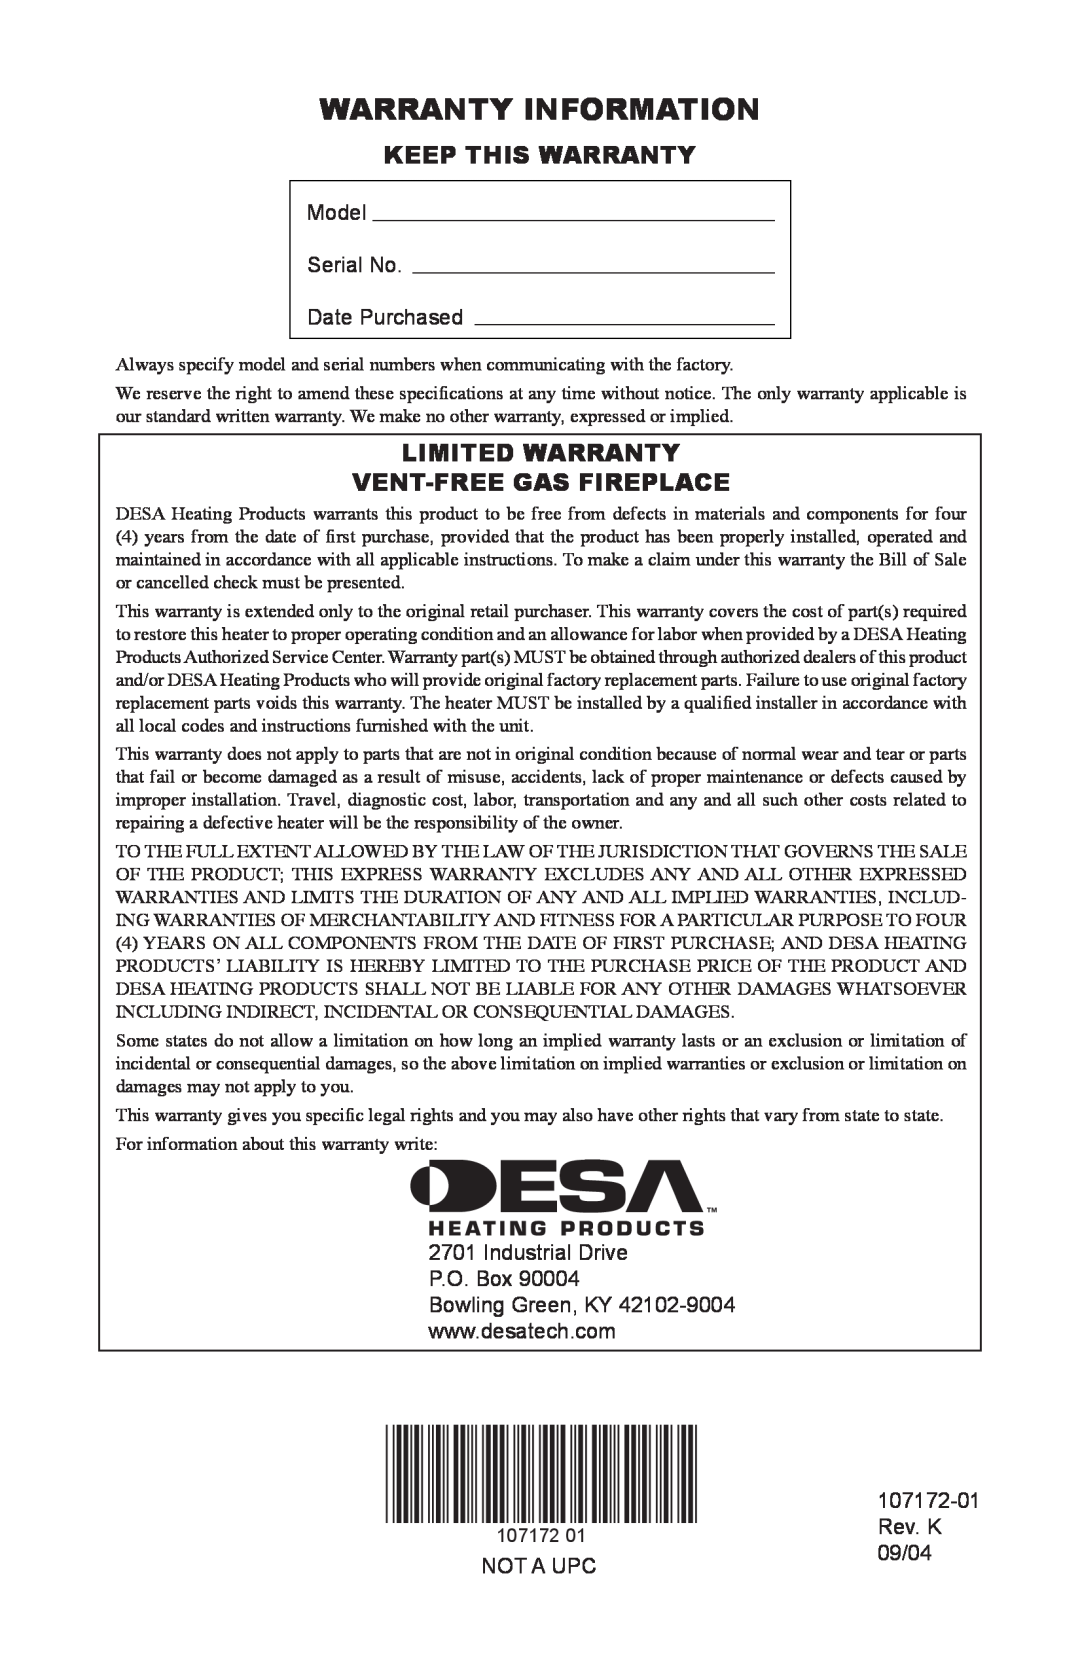 Desa EFS33NRA, VSGF33NRA Warranty Information, Keep This Warranty, Limited Warranty Vent-Freegas Fireplace, 107172-01 